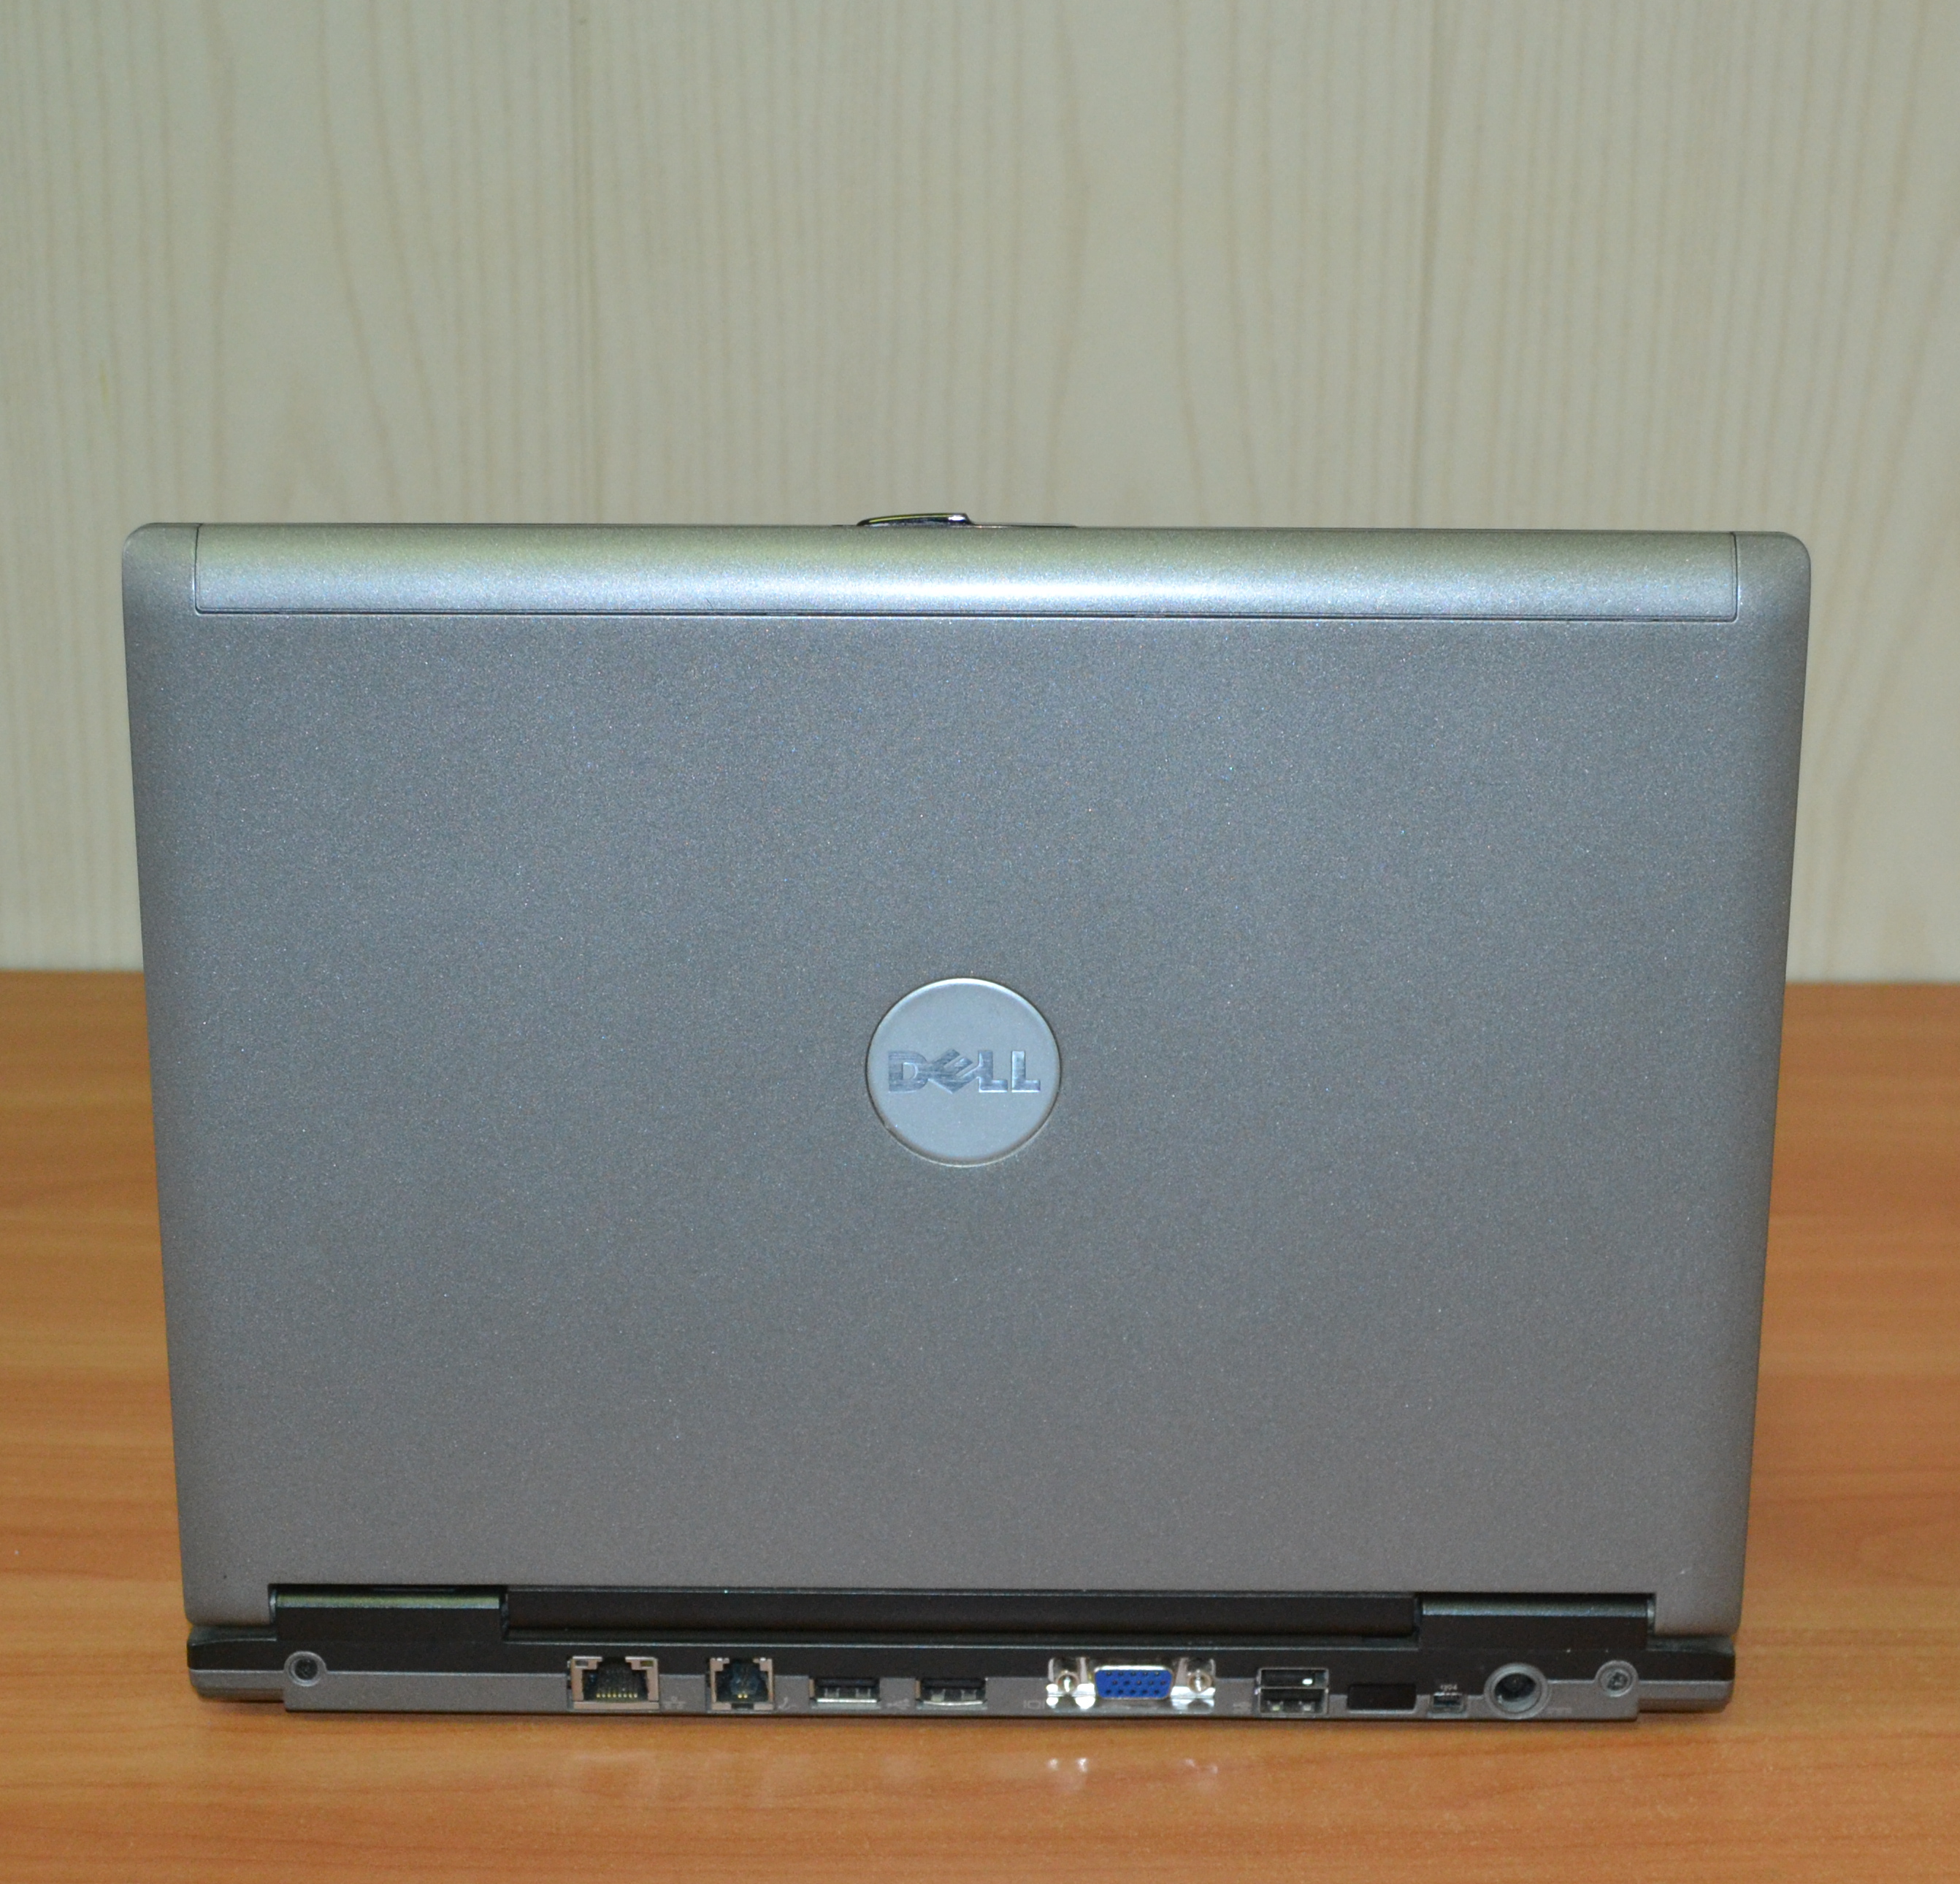 Dell D420 — купить б/у ноутбук за 5,500 руб. с гарантией 6 месяцев